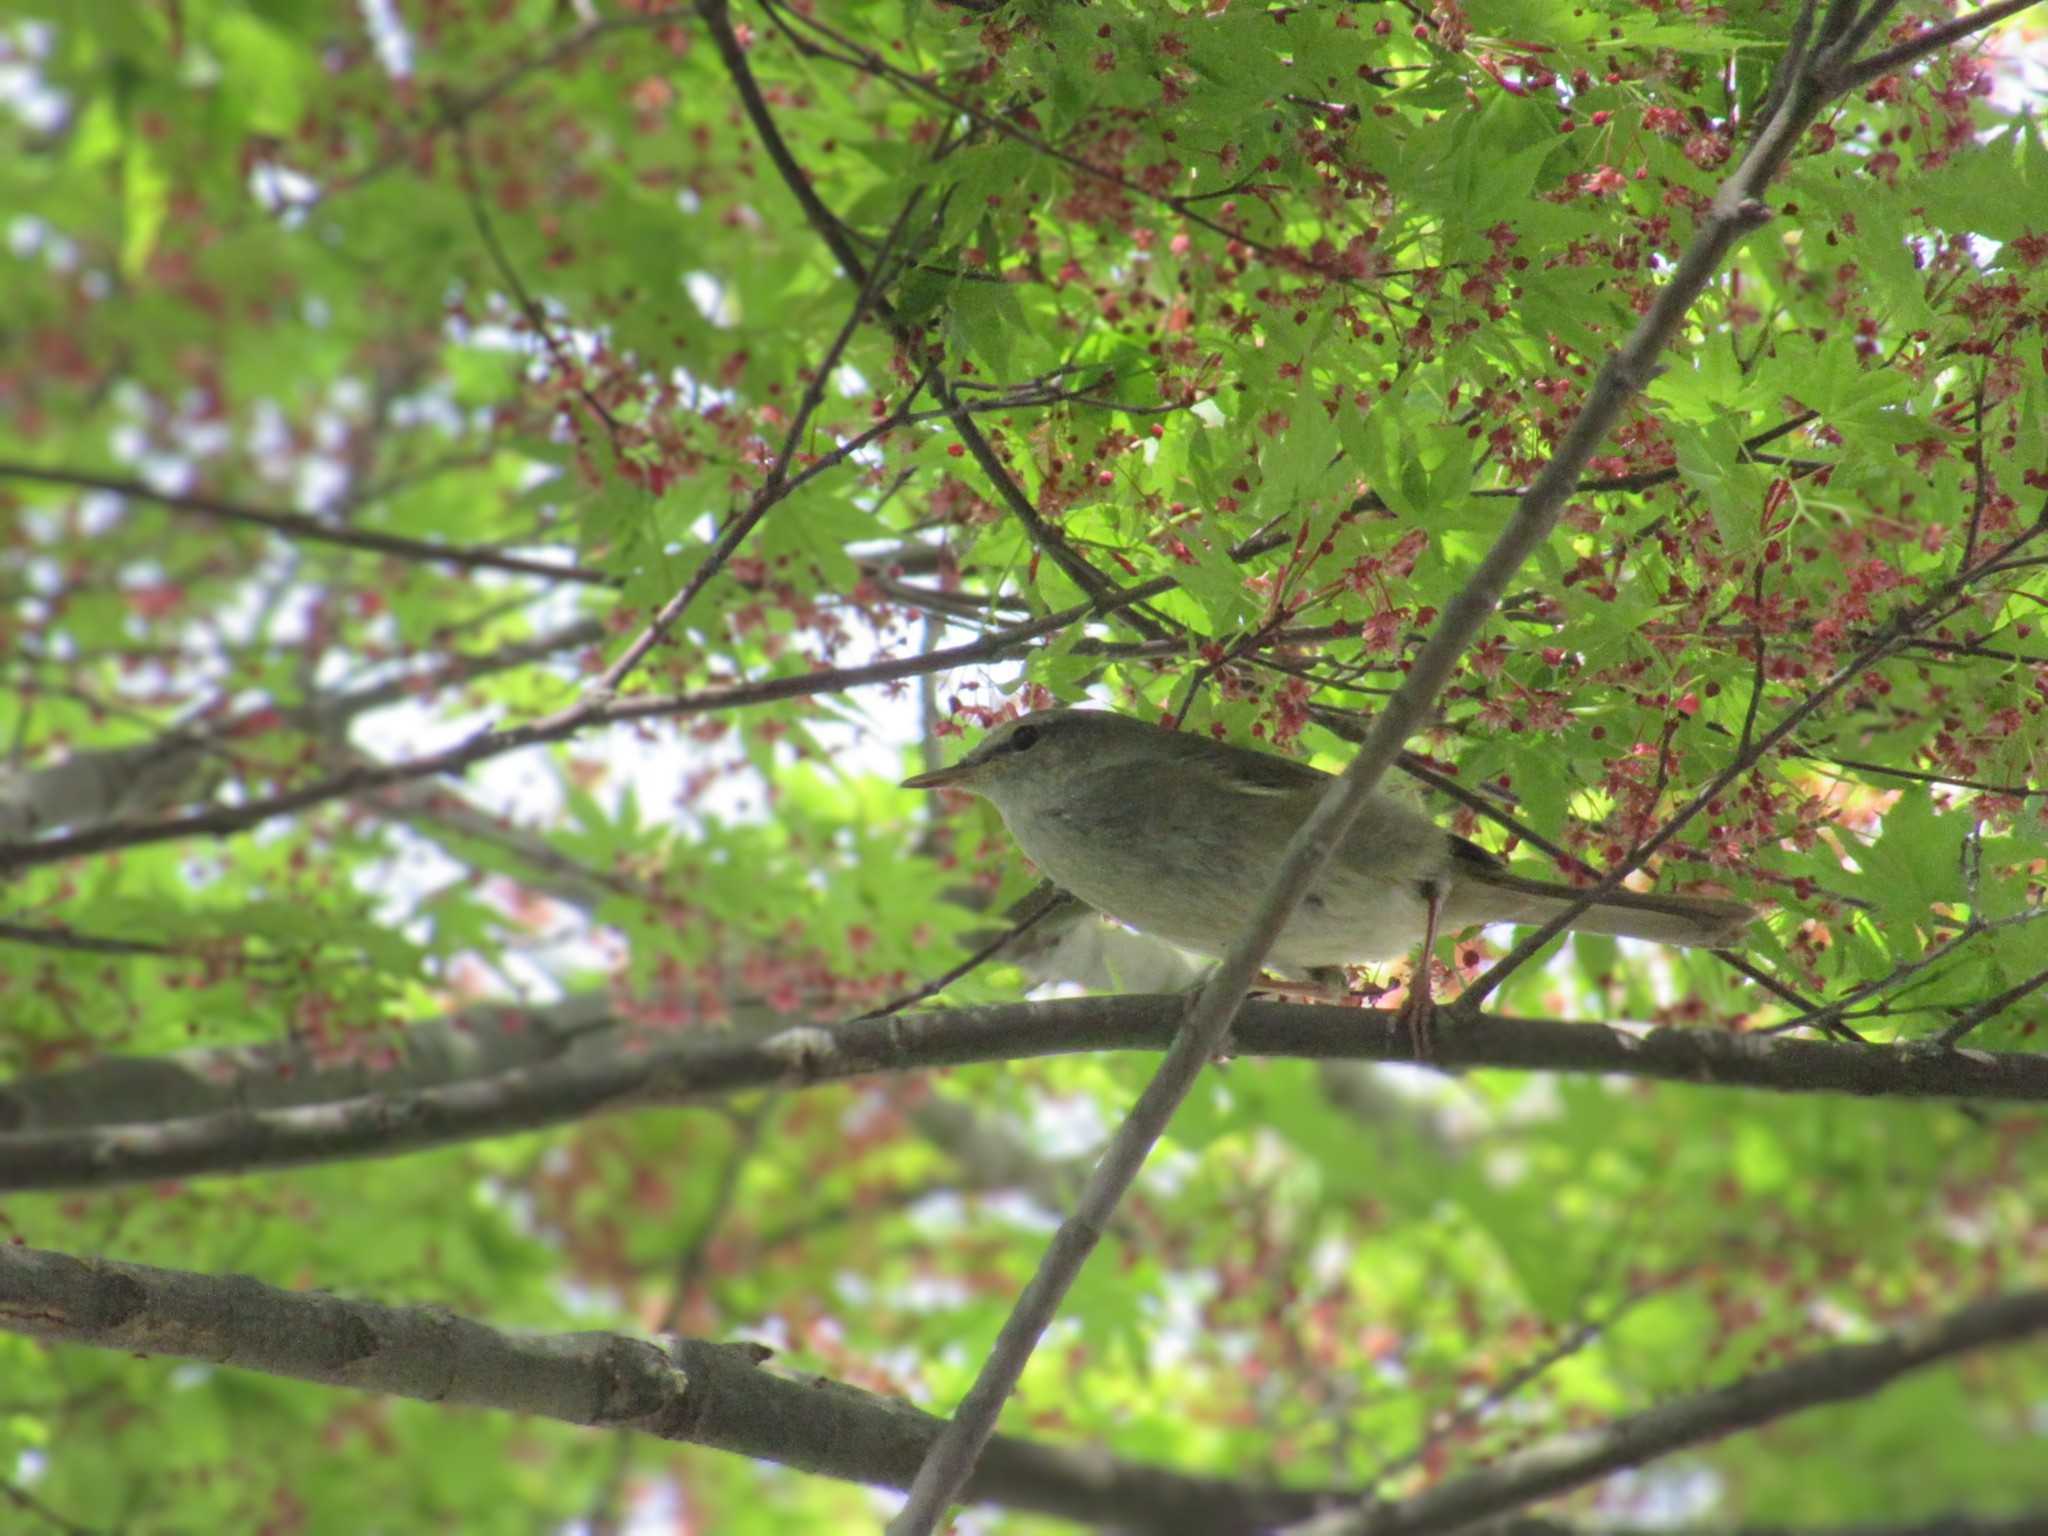 Photo of Japanese Bush Warbler at Showa Kinen Park by kohukurou